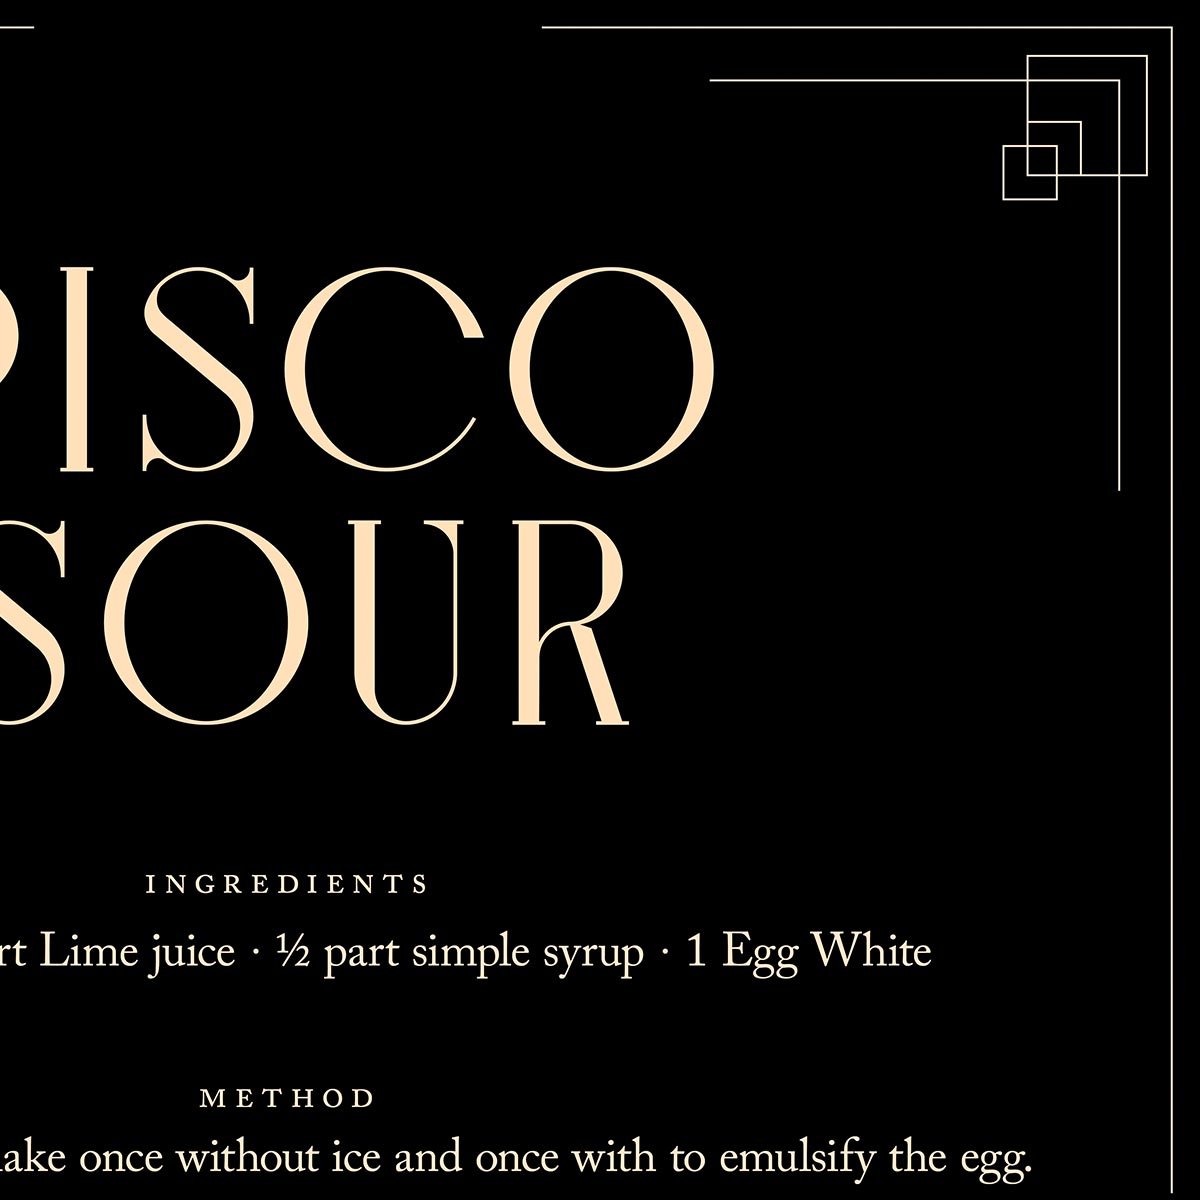 Pisco Sour Cocktail Recipe Poster